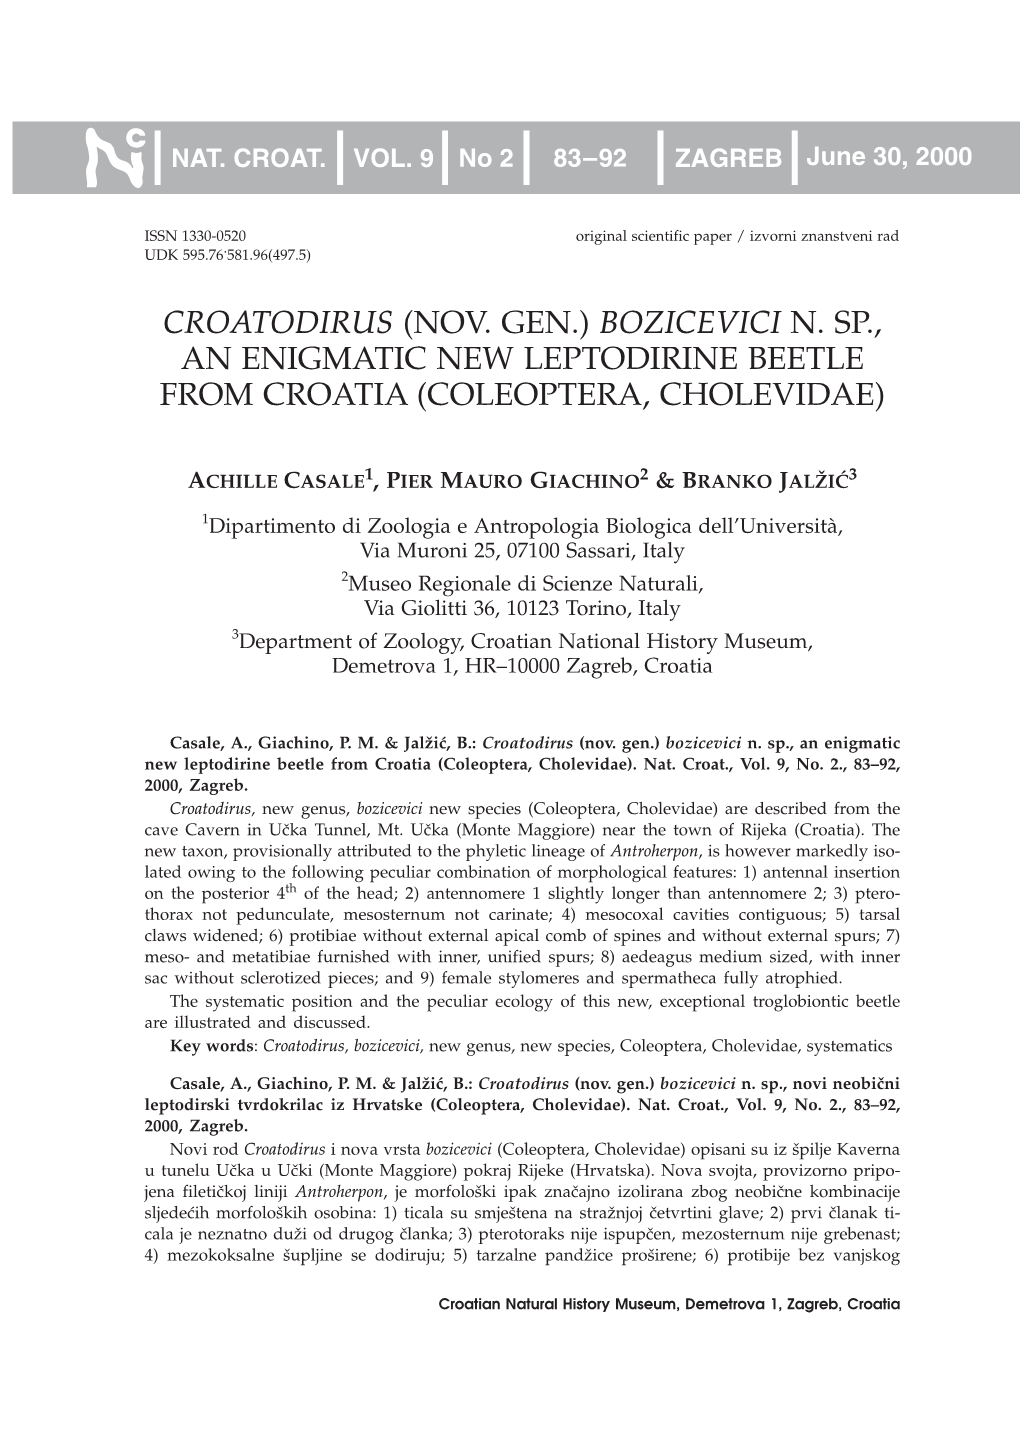 Croatodirus (Nov. Gen.) Bozicevici N. Sp., an Enigmatic New Leptodirine Beetle from Croatia (Coleoptera, Cholevidae)